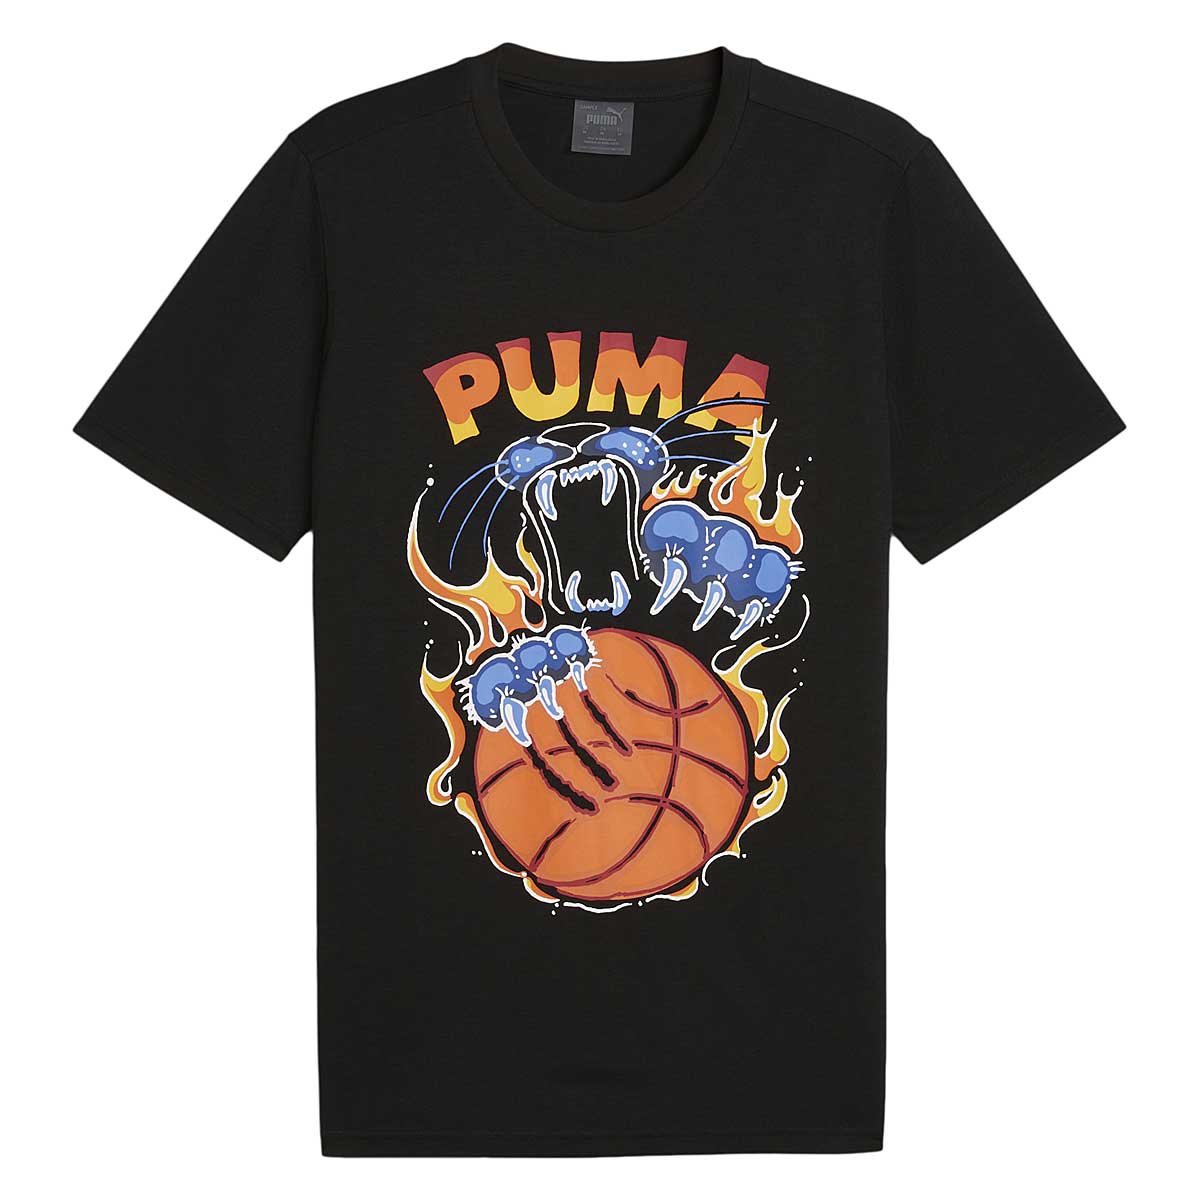 Puma Tsa T-shirt 6, Schwarz XL